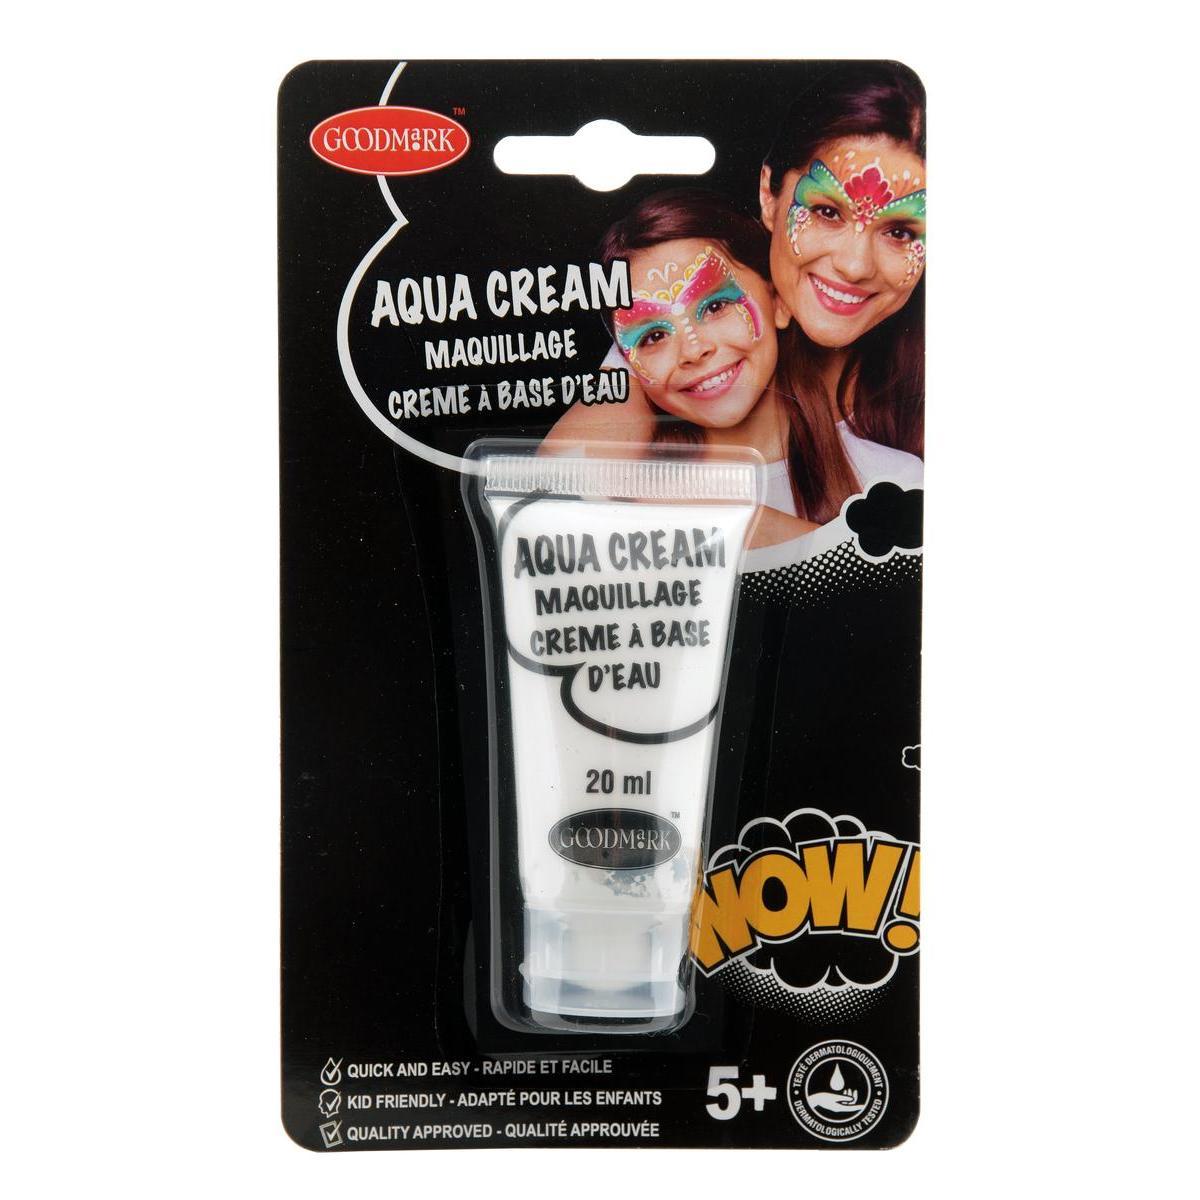 Maquillage à base d'eau - 20 ml - Blanc - GOODMARK